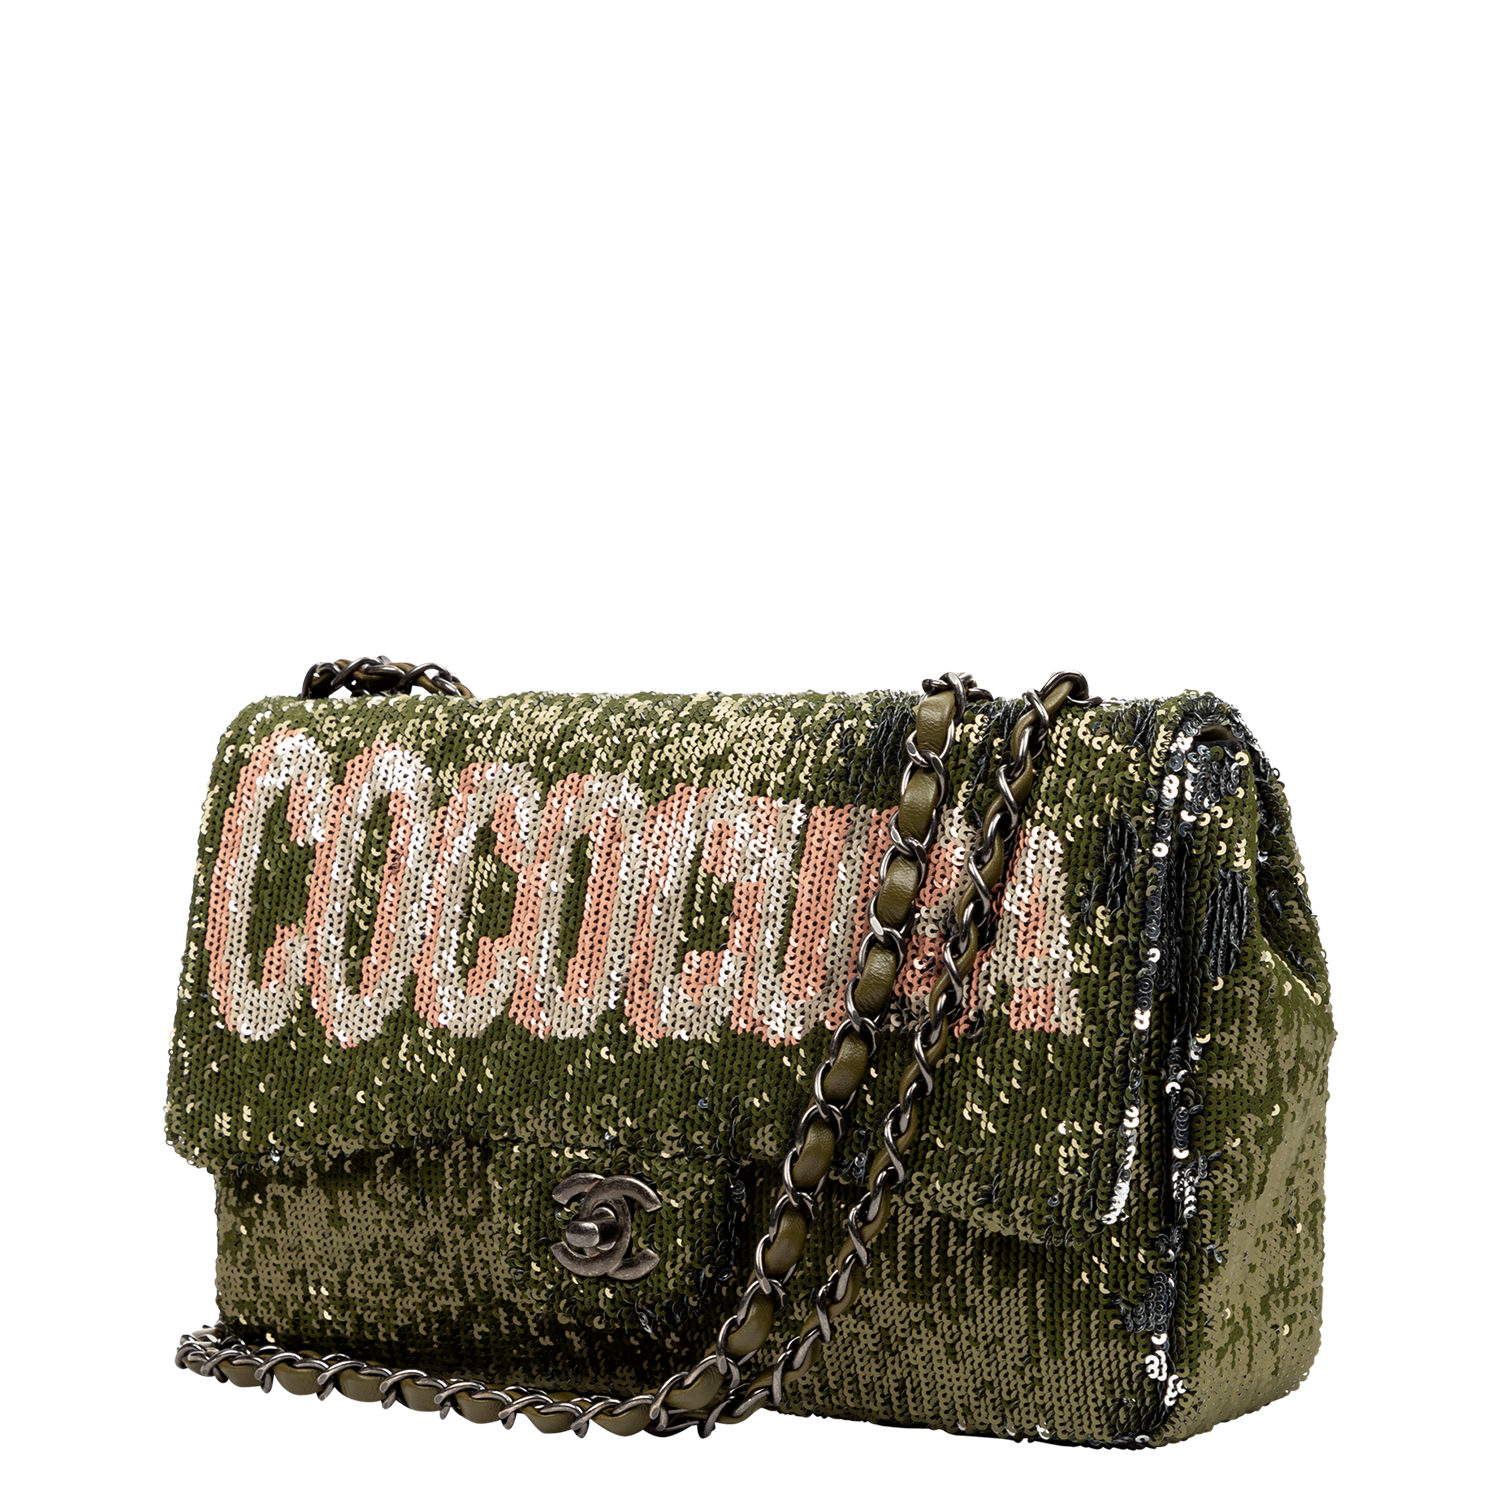 Chanel 2017 Cruise Collection Green Coco Cuba Flap Bag